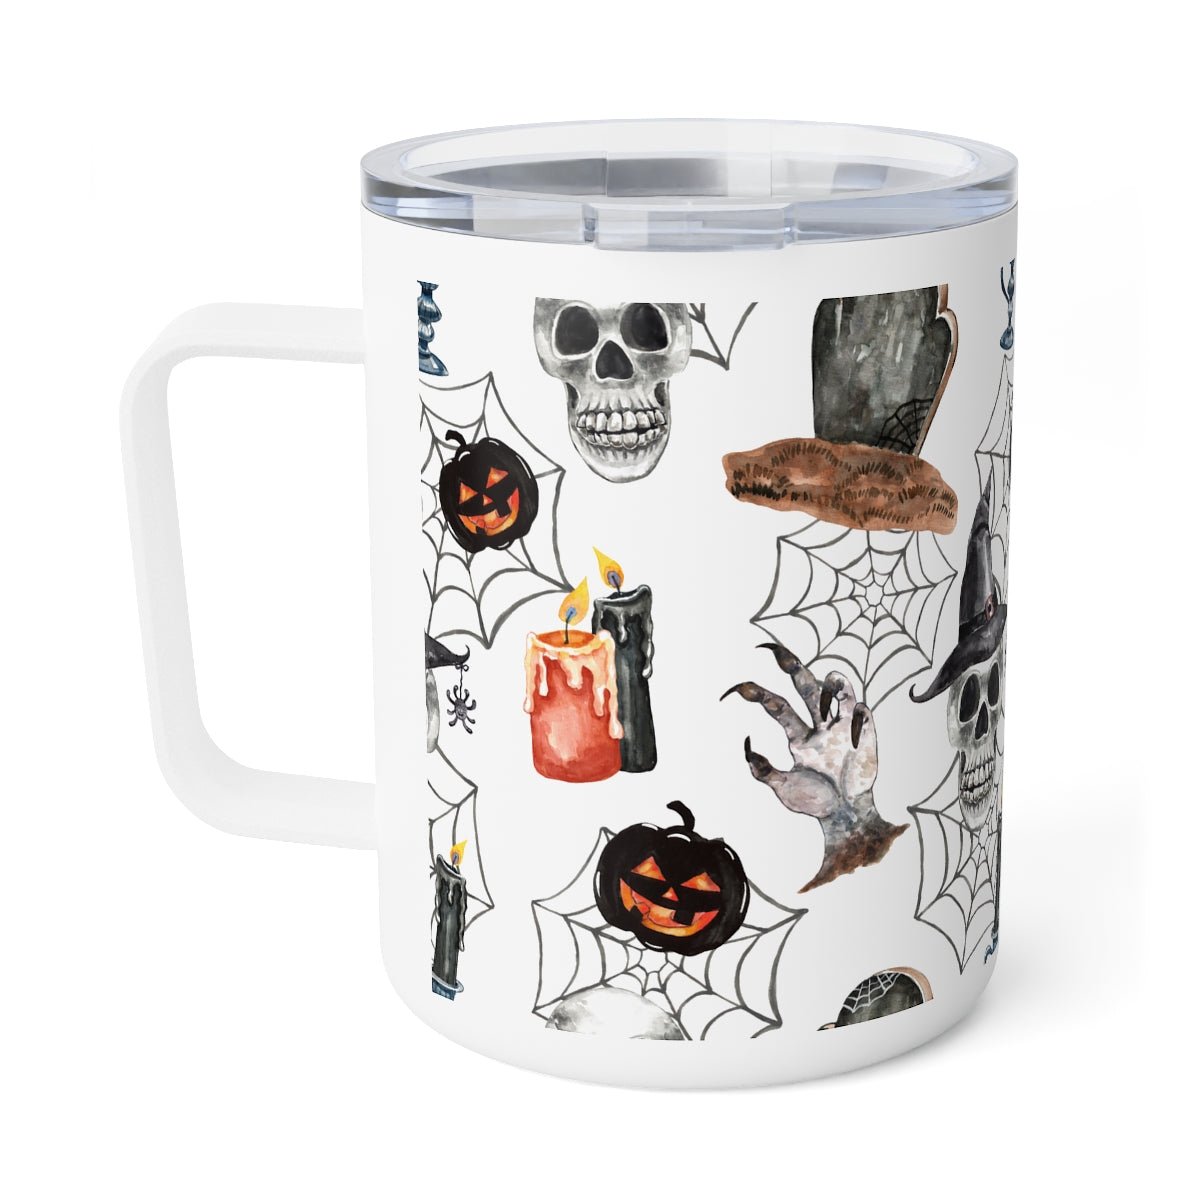 Skulls and Pumpkins Insulated Coffee Mug - Puffin Lime